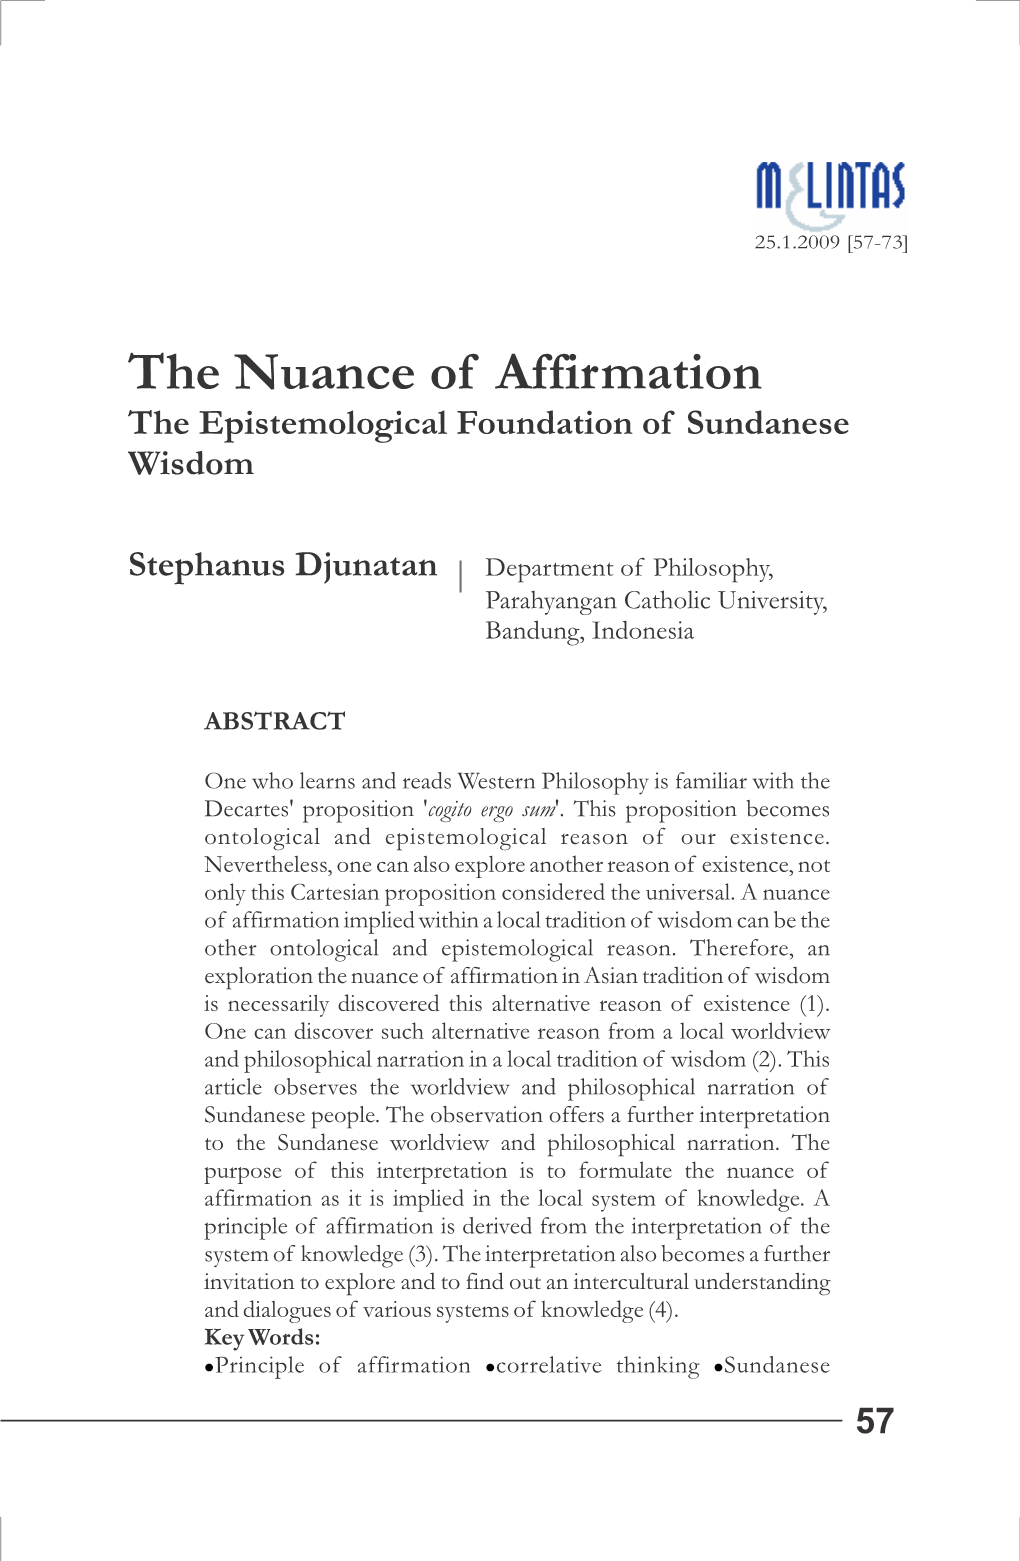 The Nuance of Affirmation the Epistemological Foundation of Sundanese Wisdom